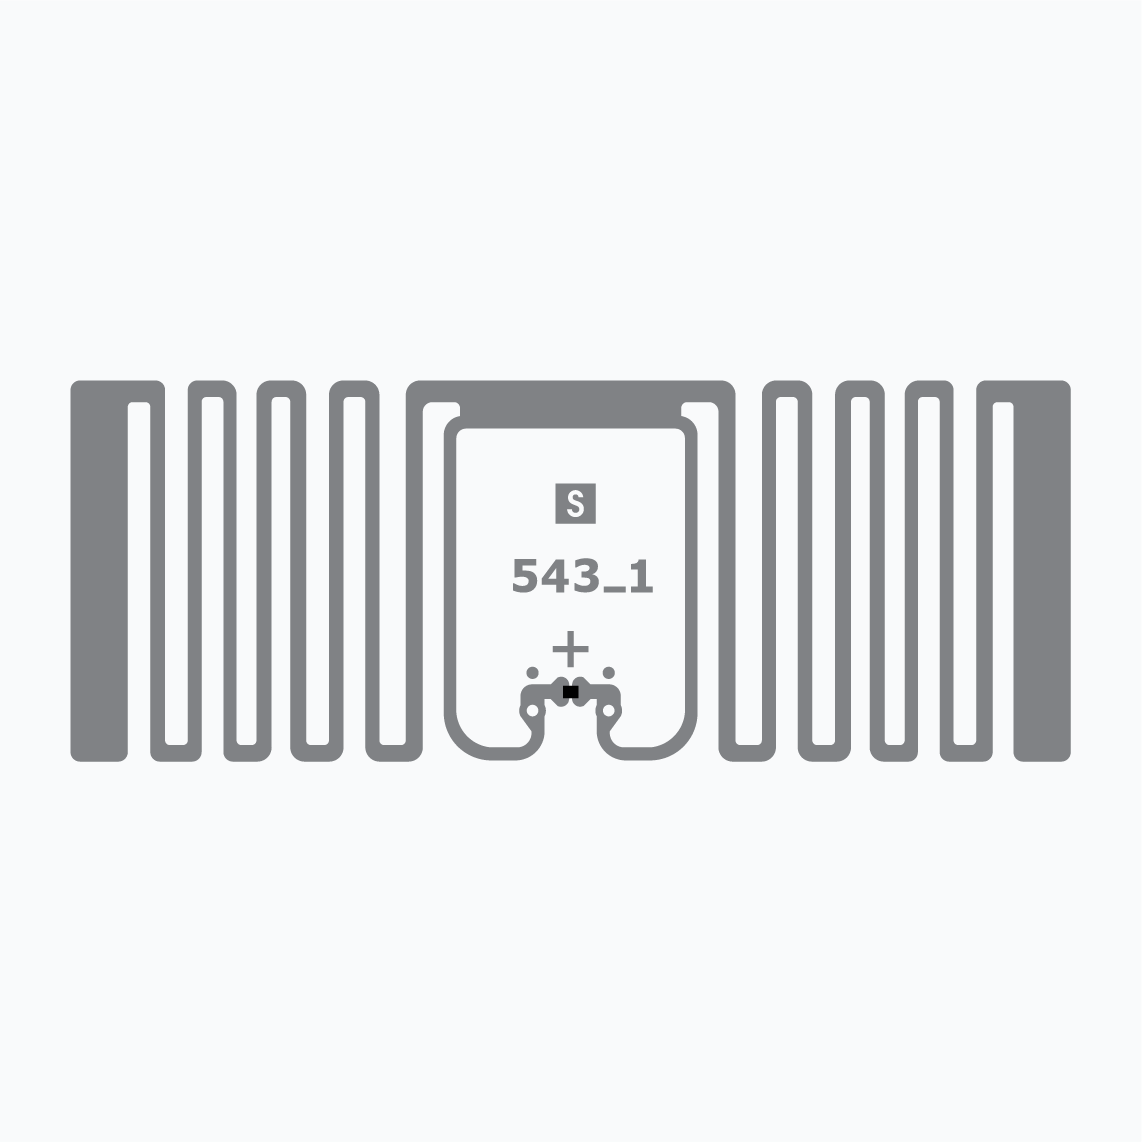 UHF RFID Inlay: Miniweb, UCODE8 ETSI